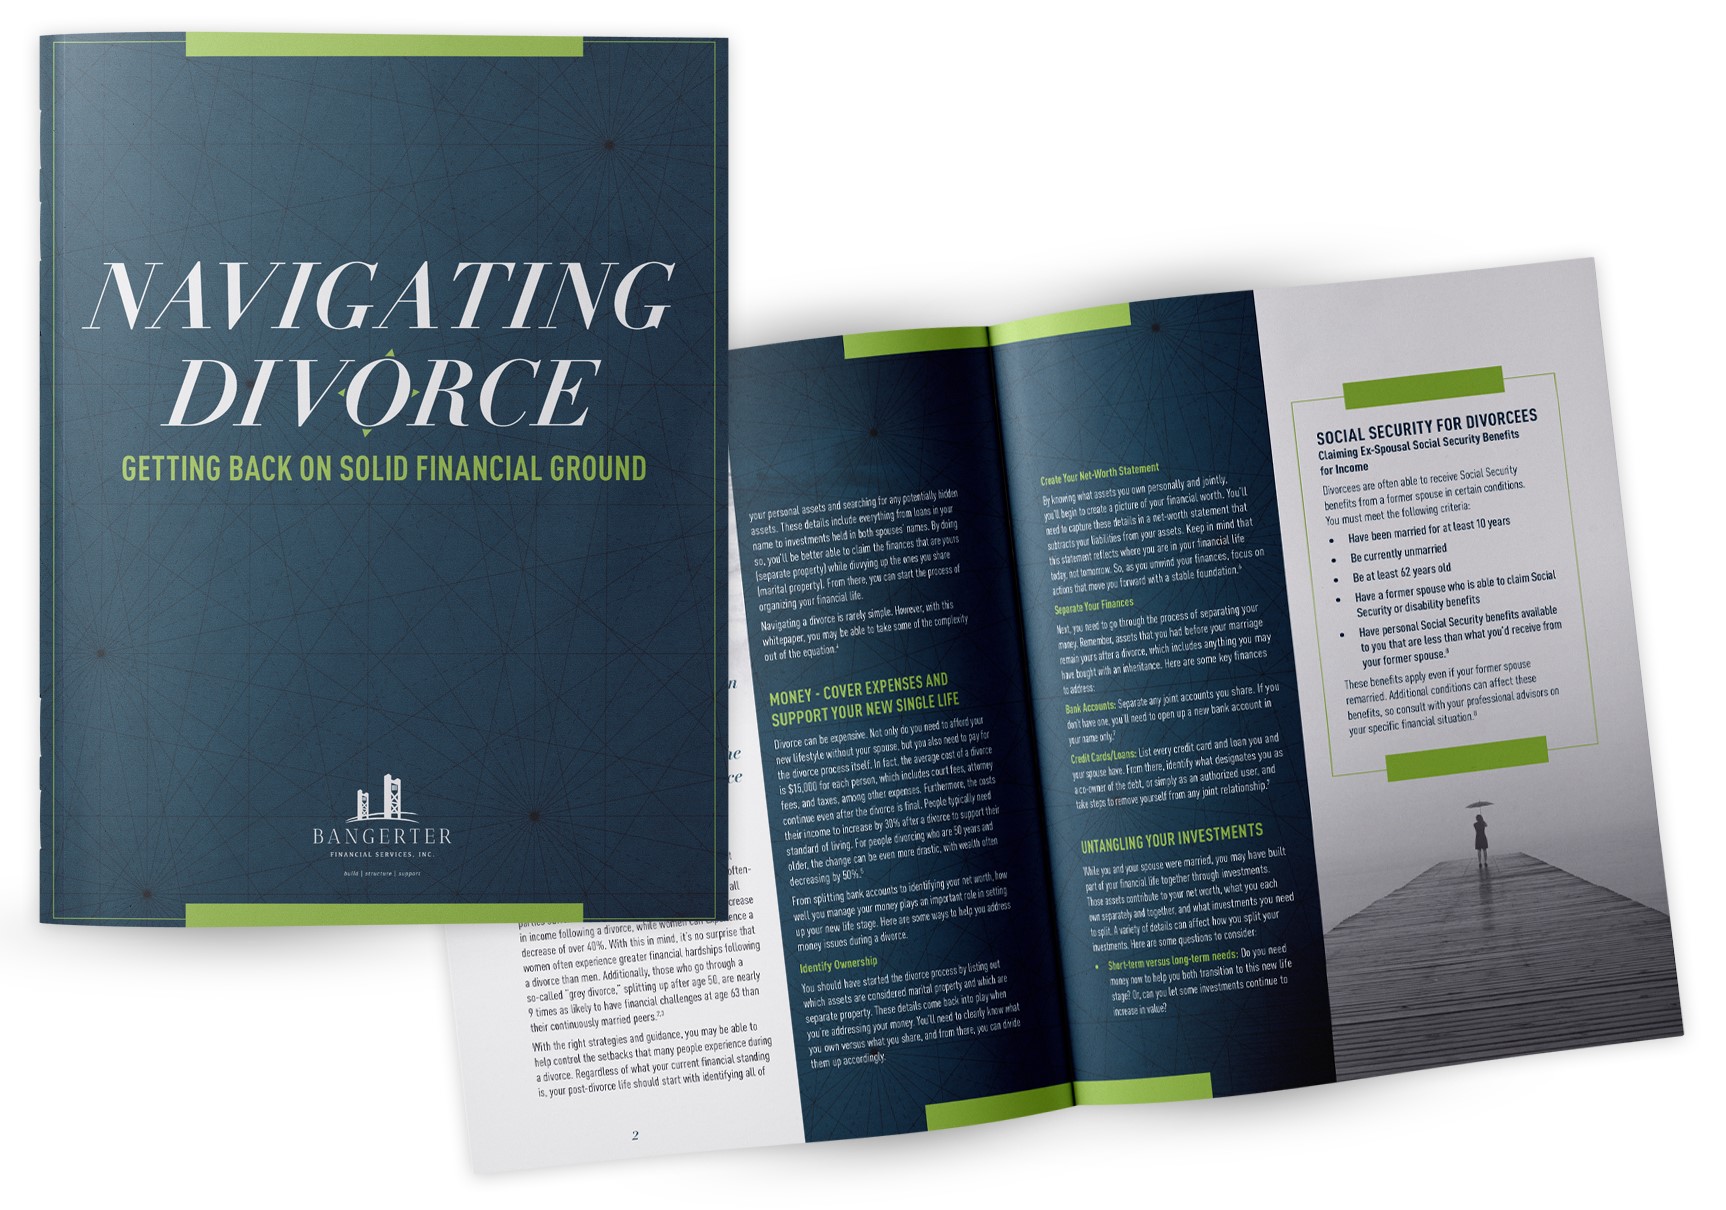 "Navigating Divorce: Getting Back on Solid Financial Ground" Downloadable Guide